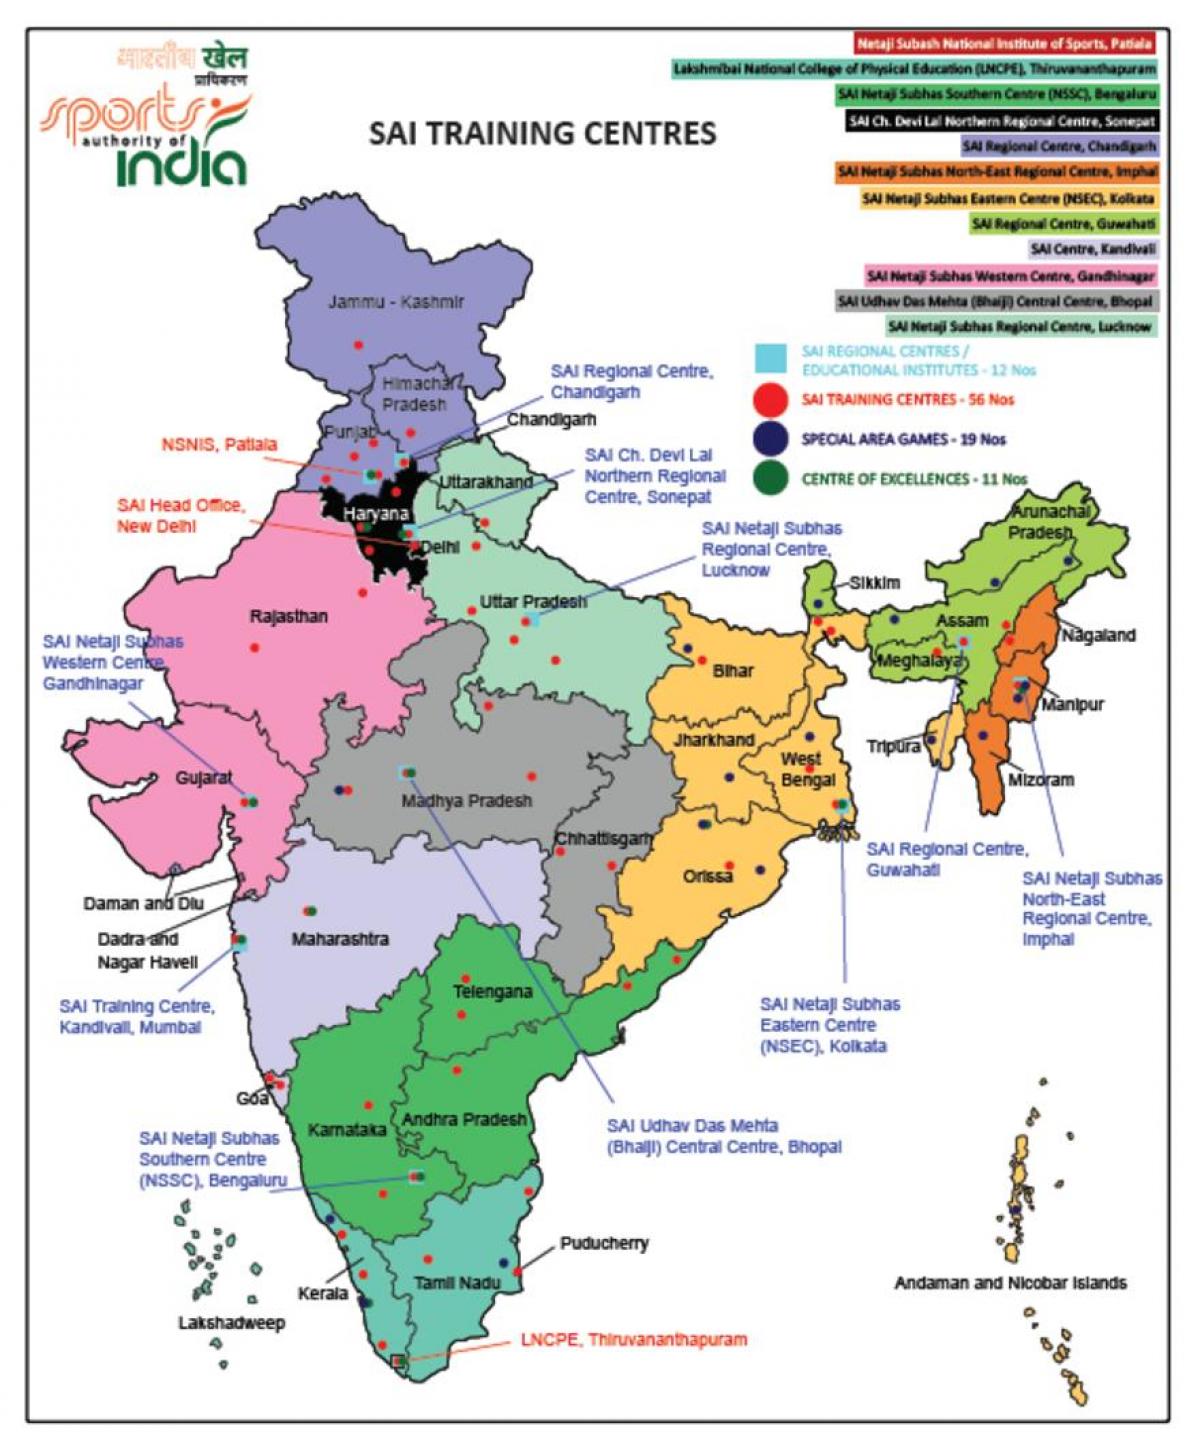 stadiums map of India